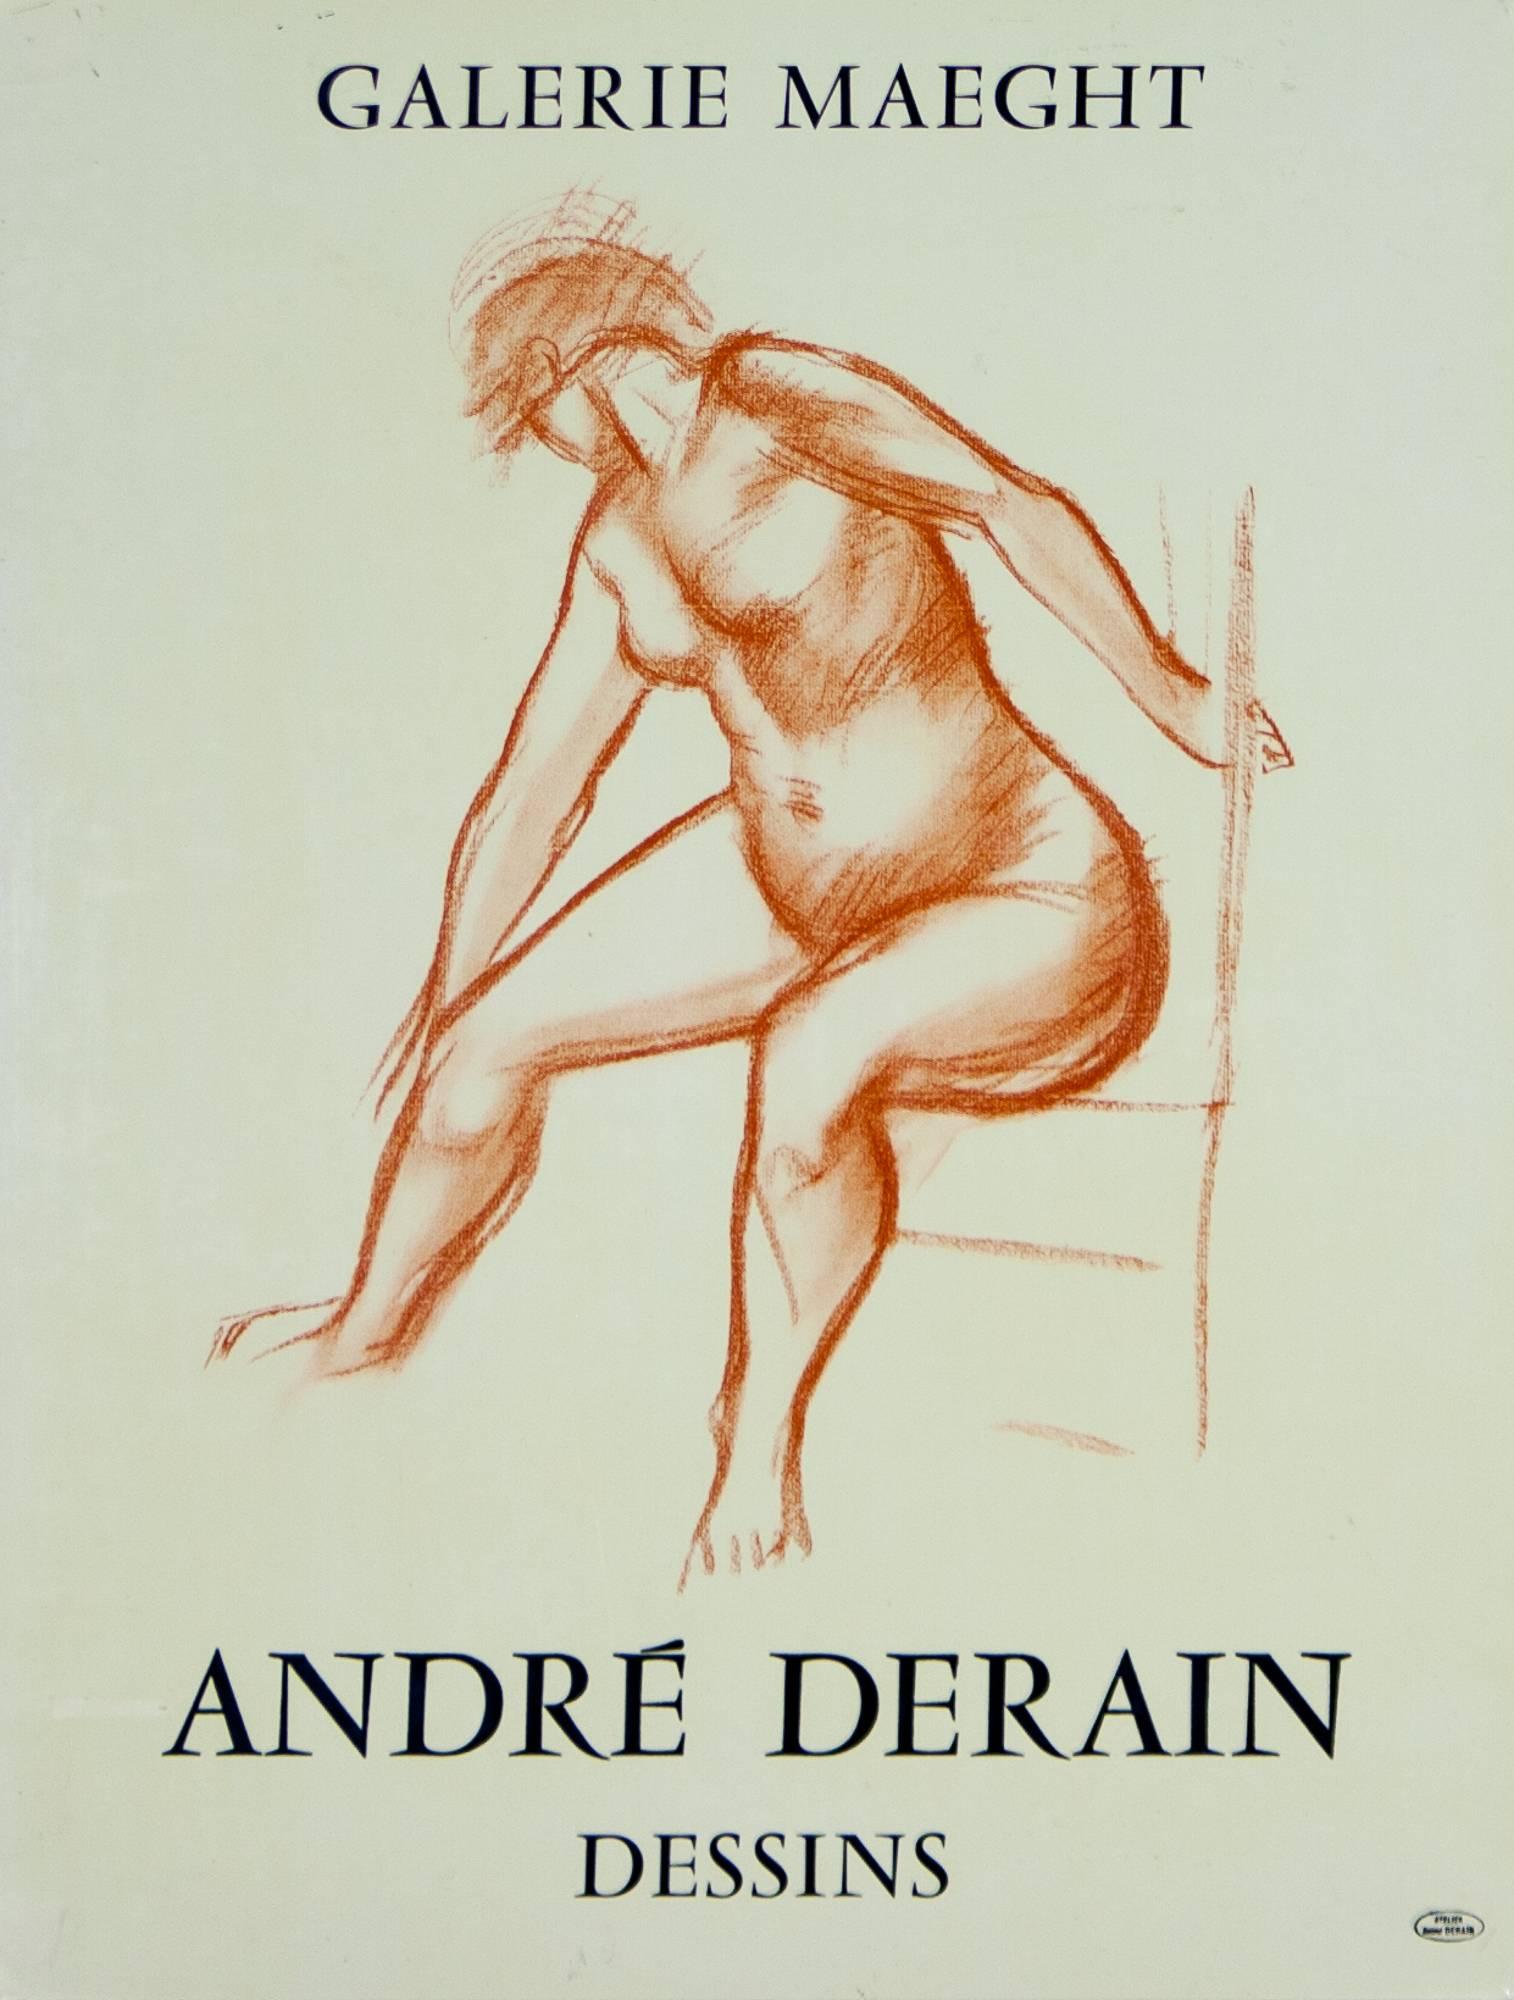 Andre Derain Dessins Galeries Maeght 